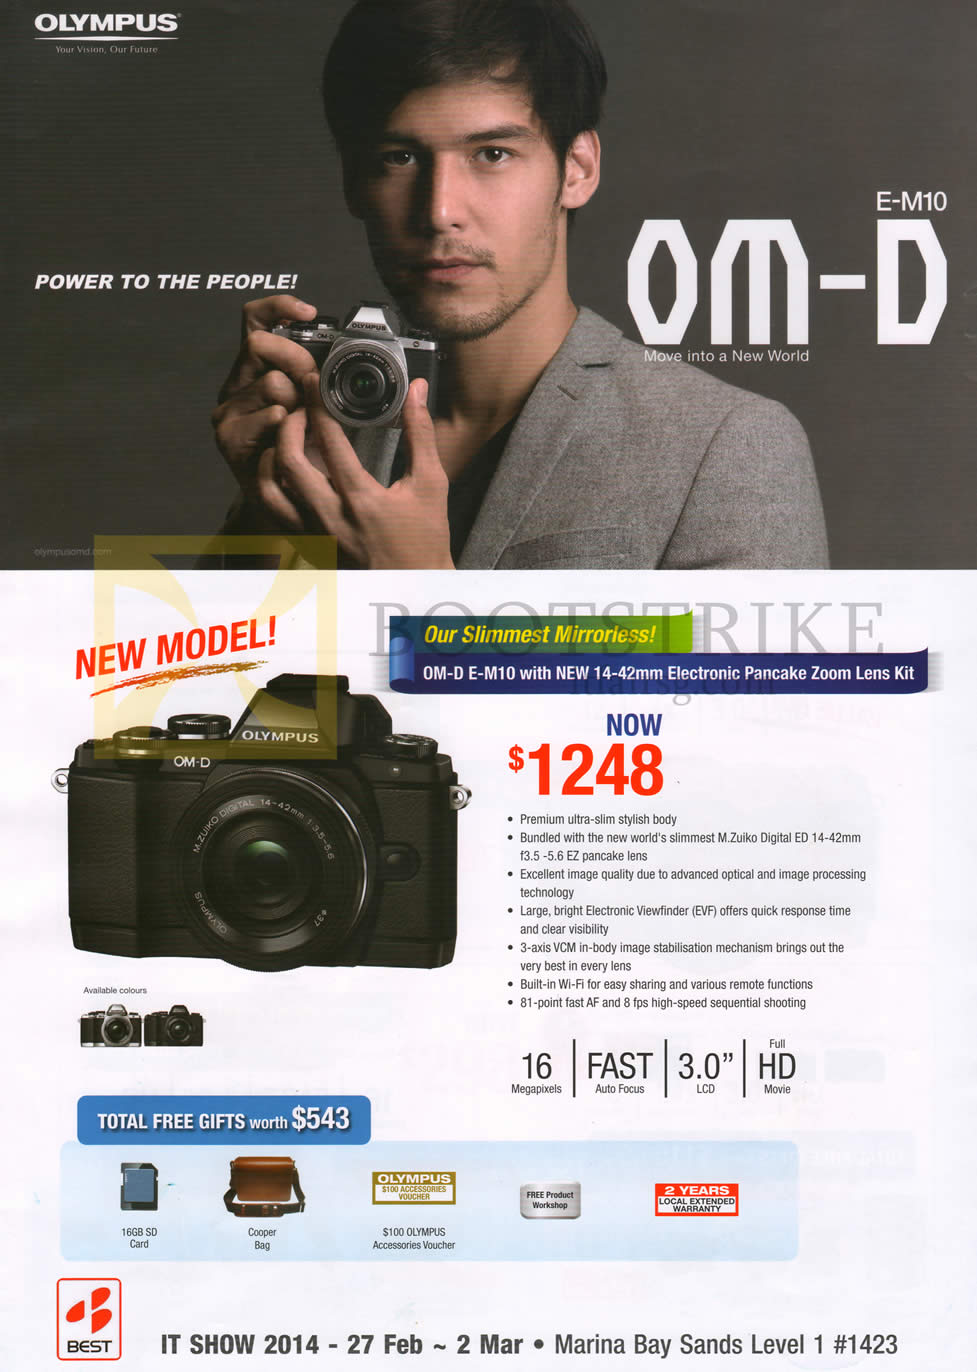 IT SHOW 2014 price list image brochure of Olympus Digital Cameras OM-D E-M10